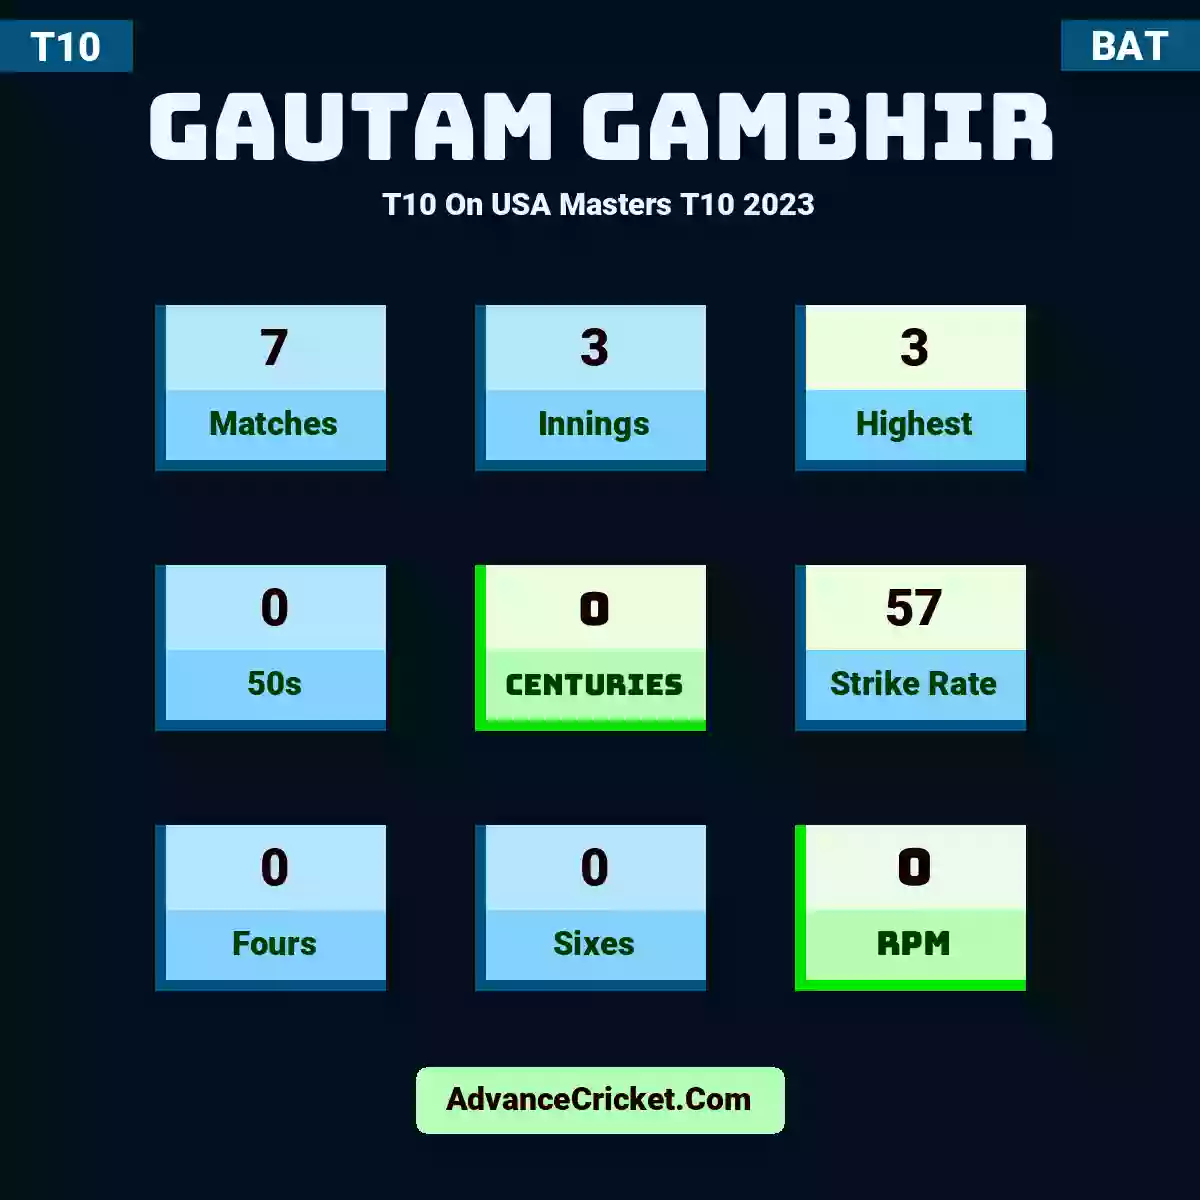 Gautam Gambhir T10  On USA Masters T10 2023, Gautam Gambhir played 7 matches, scored 3 runs as highest, 0 half-centuries, and 0 centuries, with a strike rate of 57. G.Gambhir hit 0 fours and 0 sixes, with an RPM of 0.